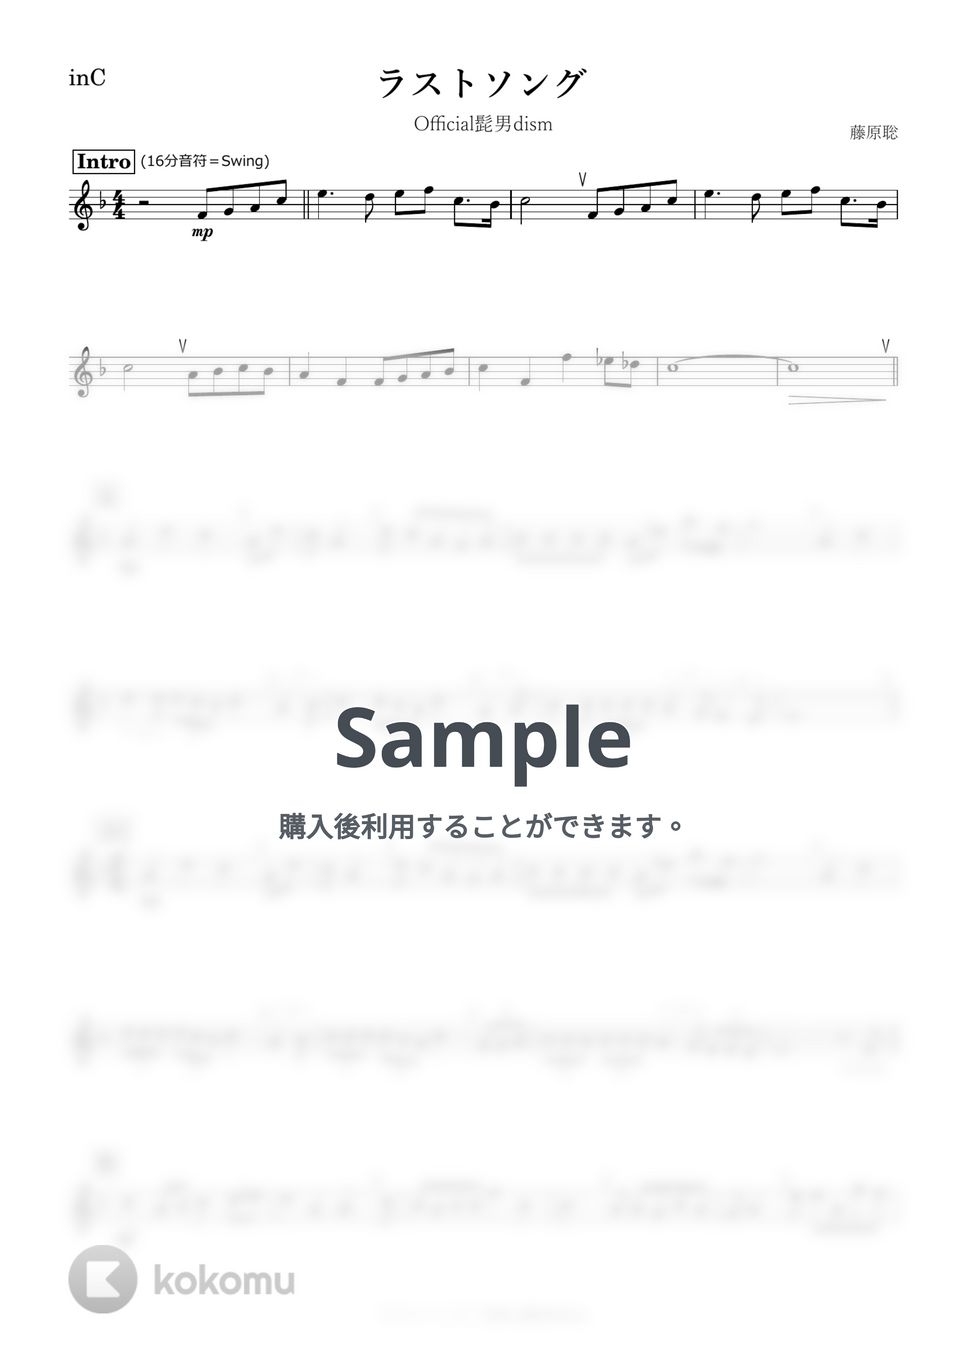 Official髭男dism - ラストソング (C) by kanamusic